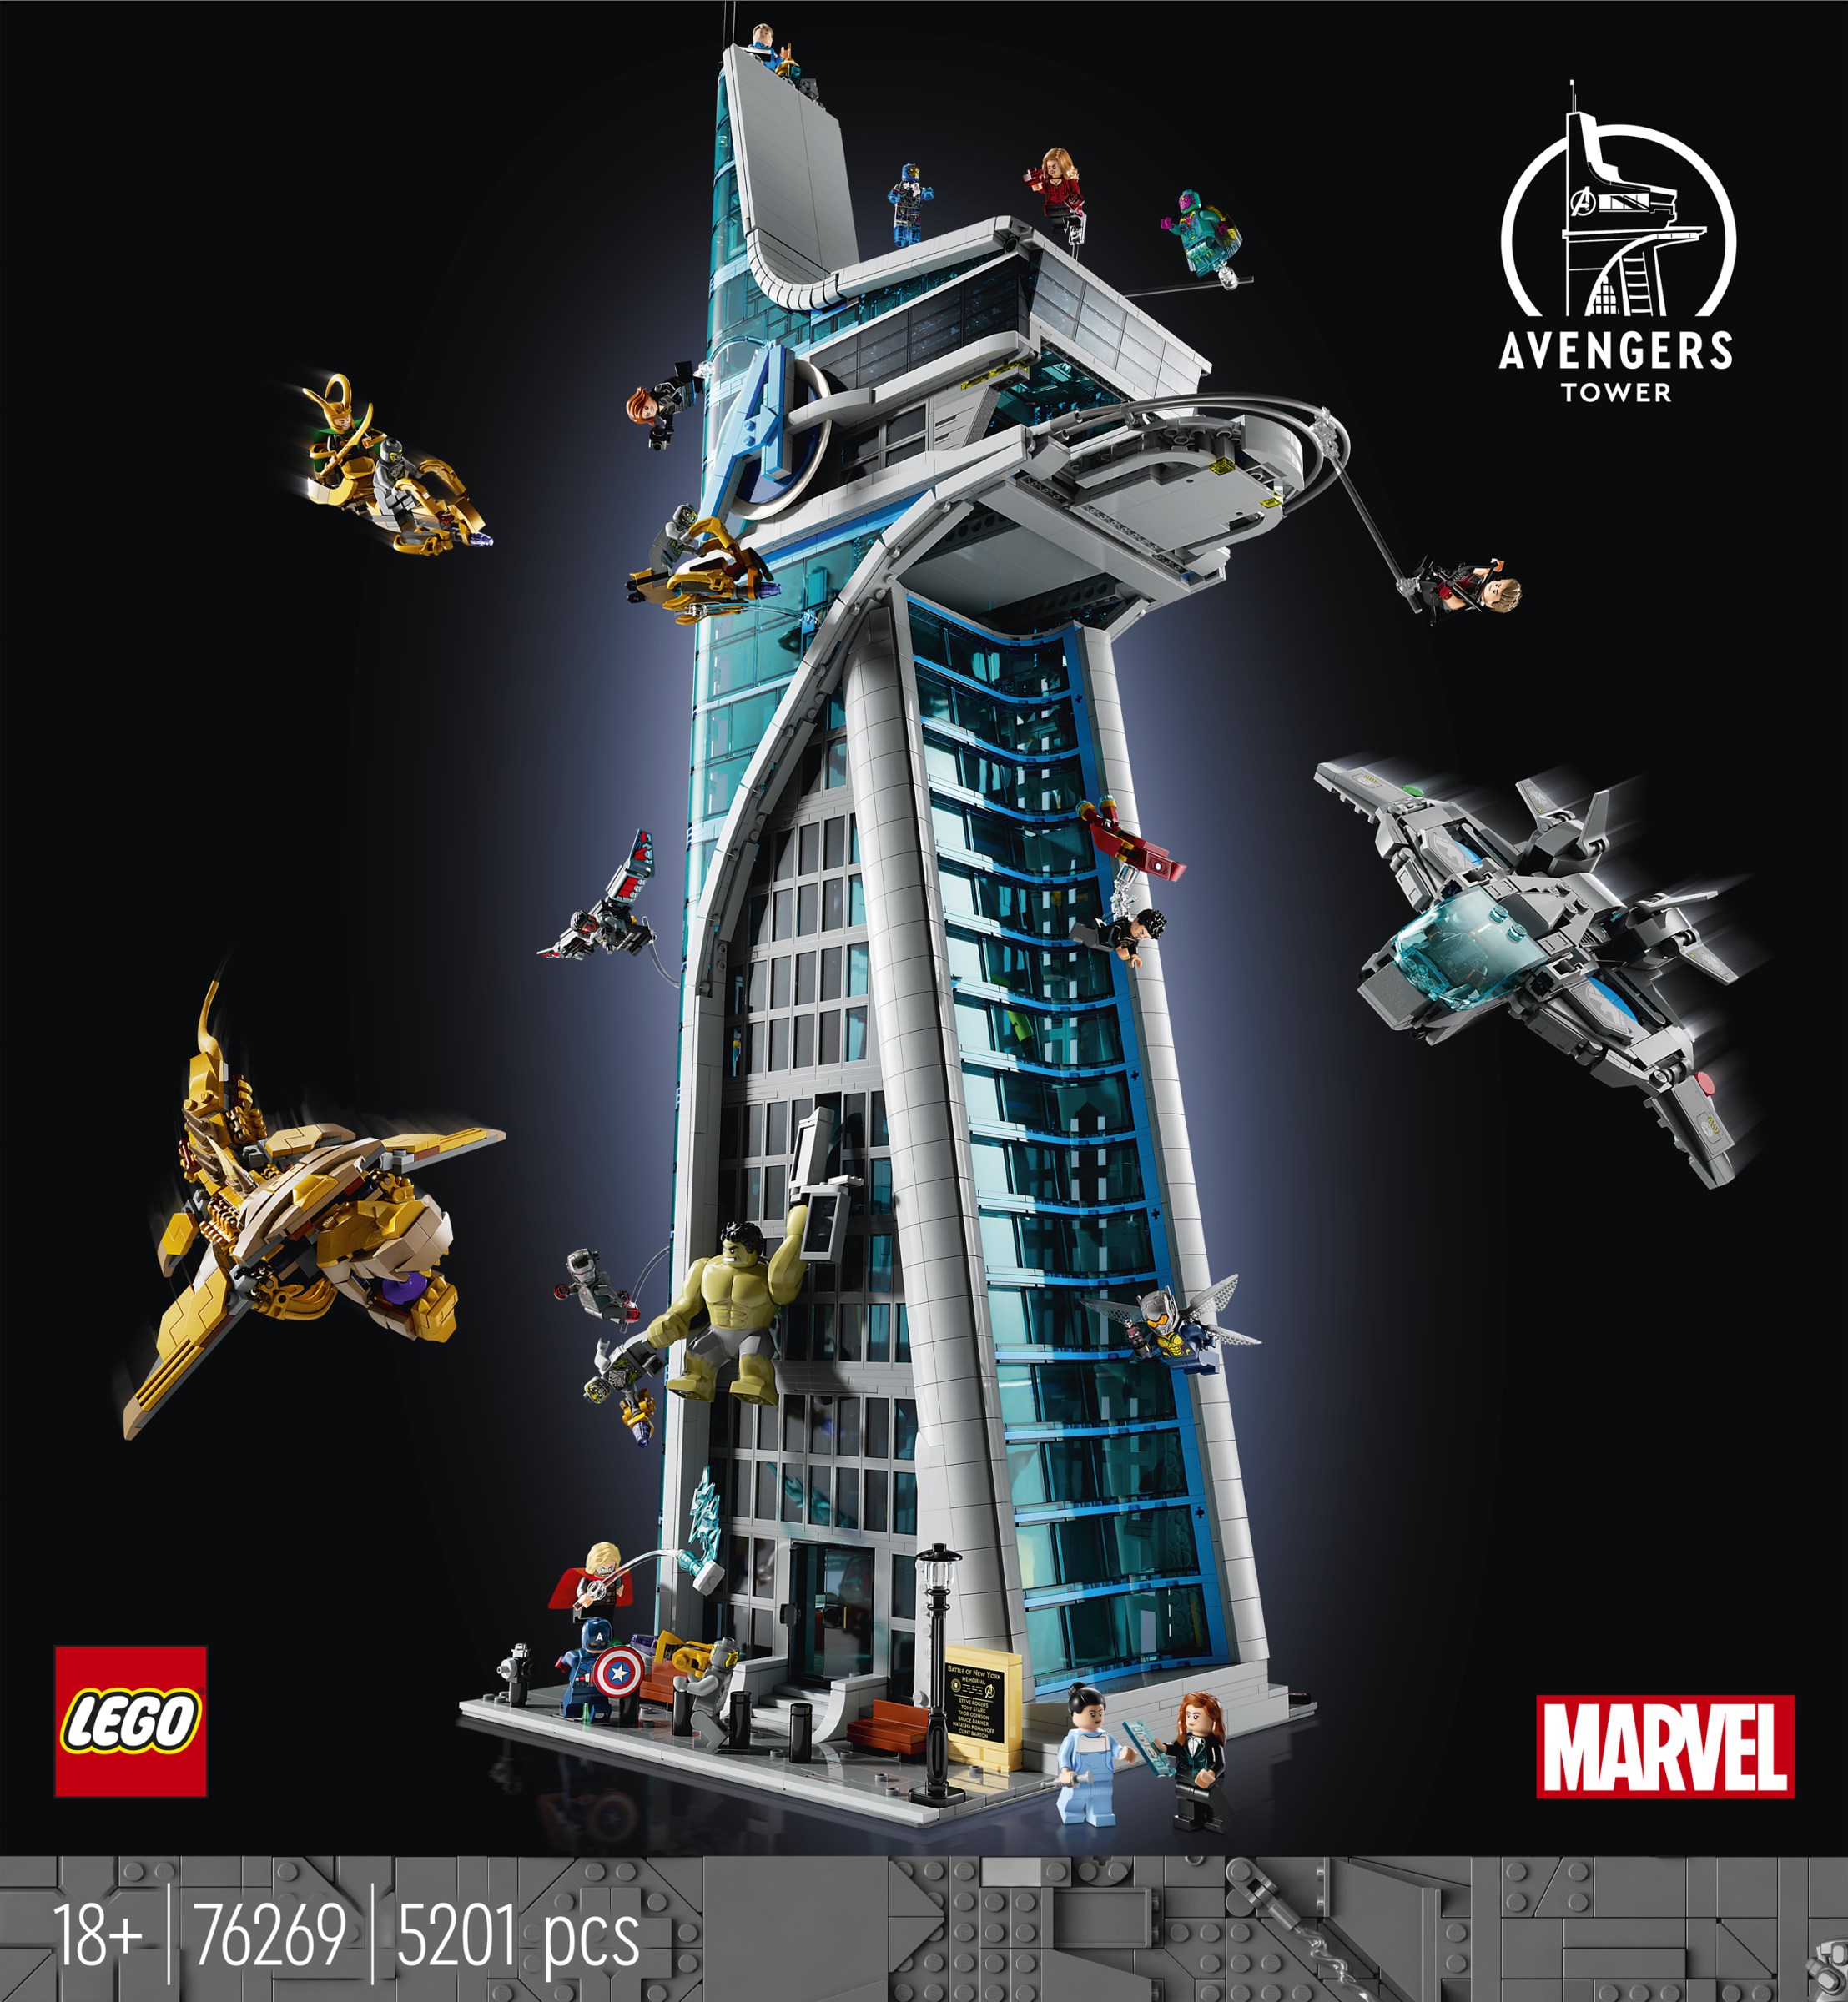 Marvel Mini Egg Attack Figures The Infinity Saga Stark Tower series Loki 12  cm